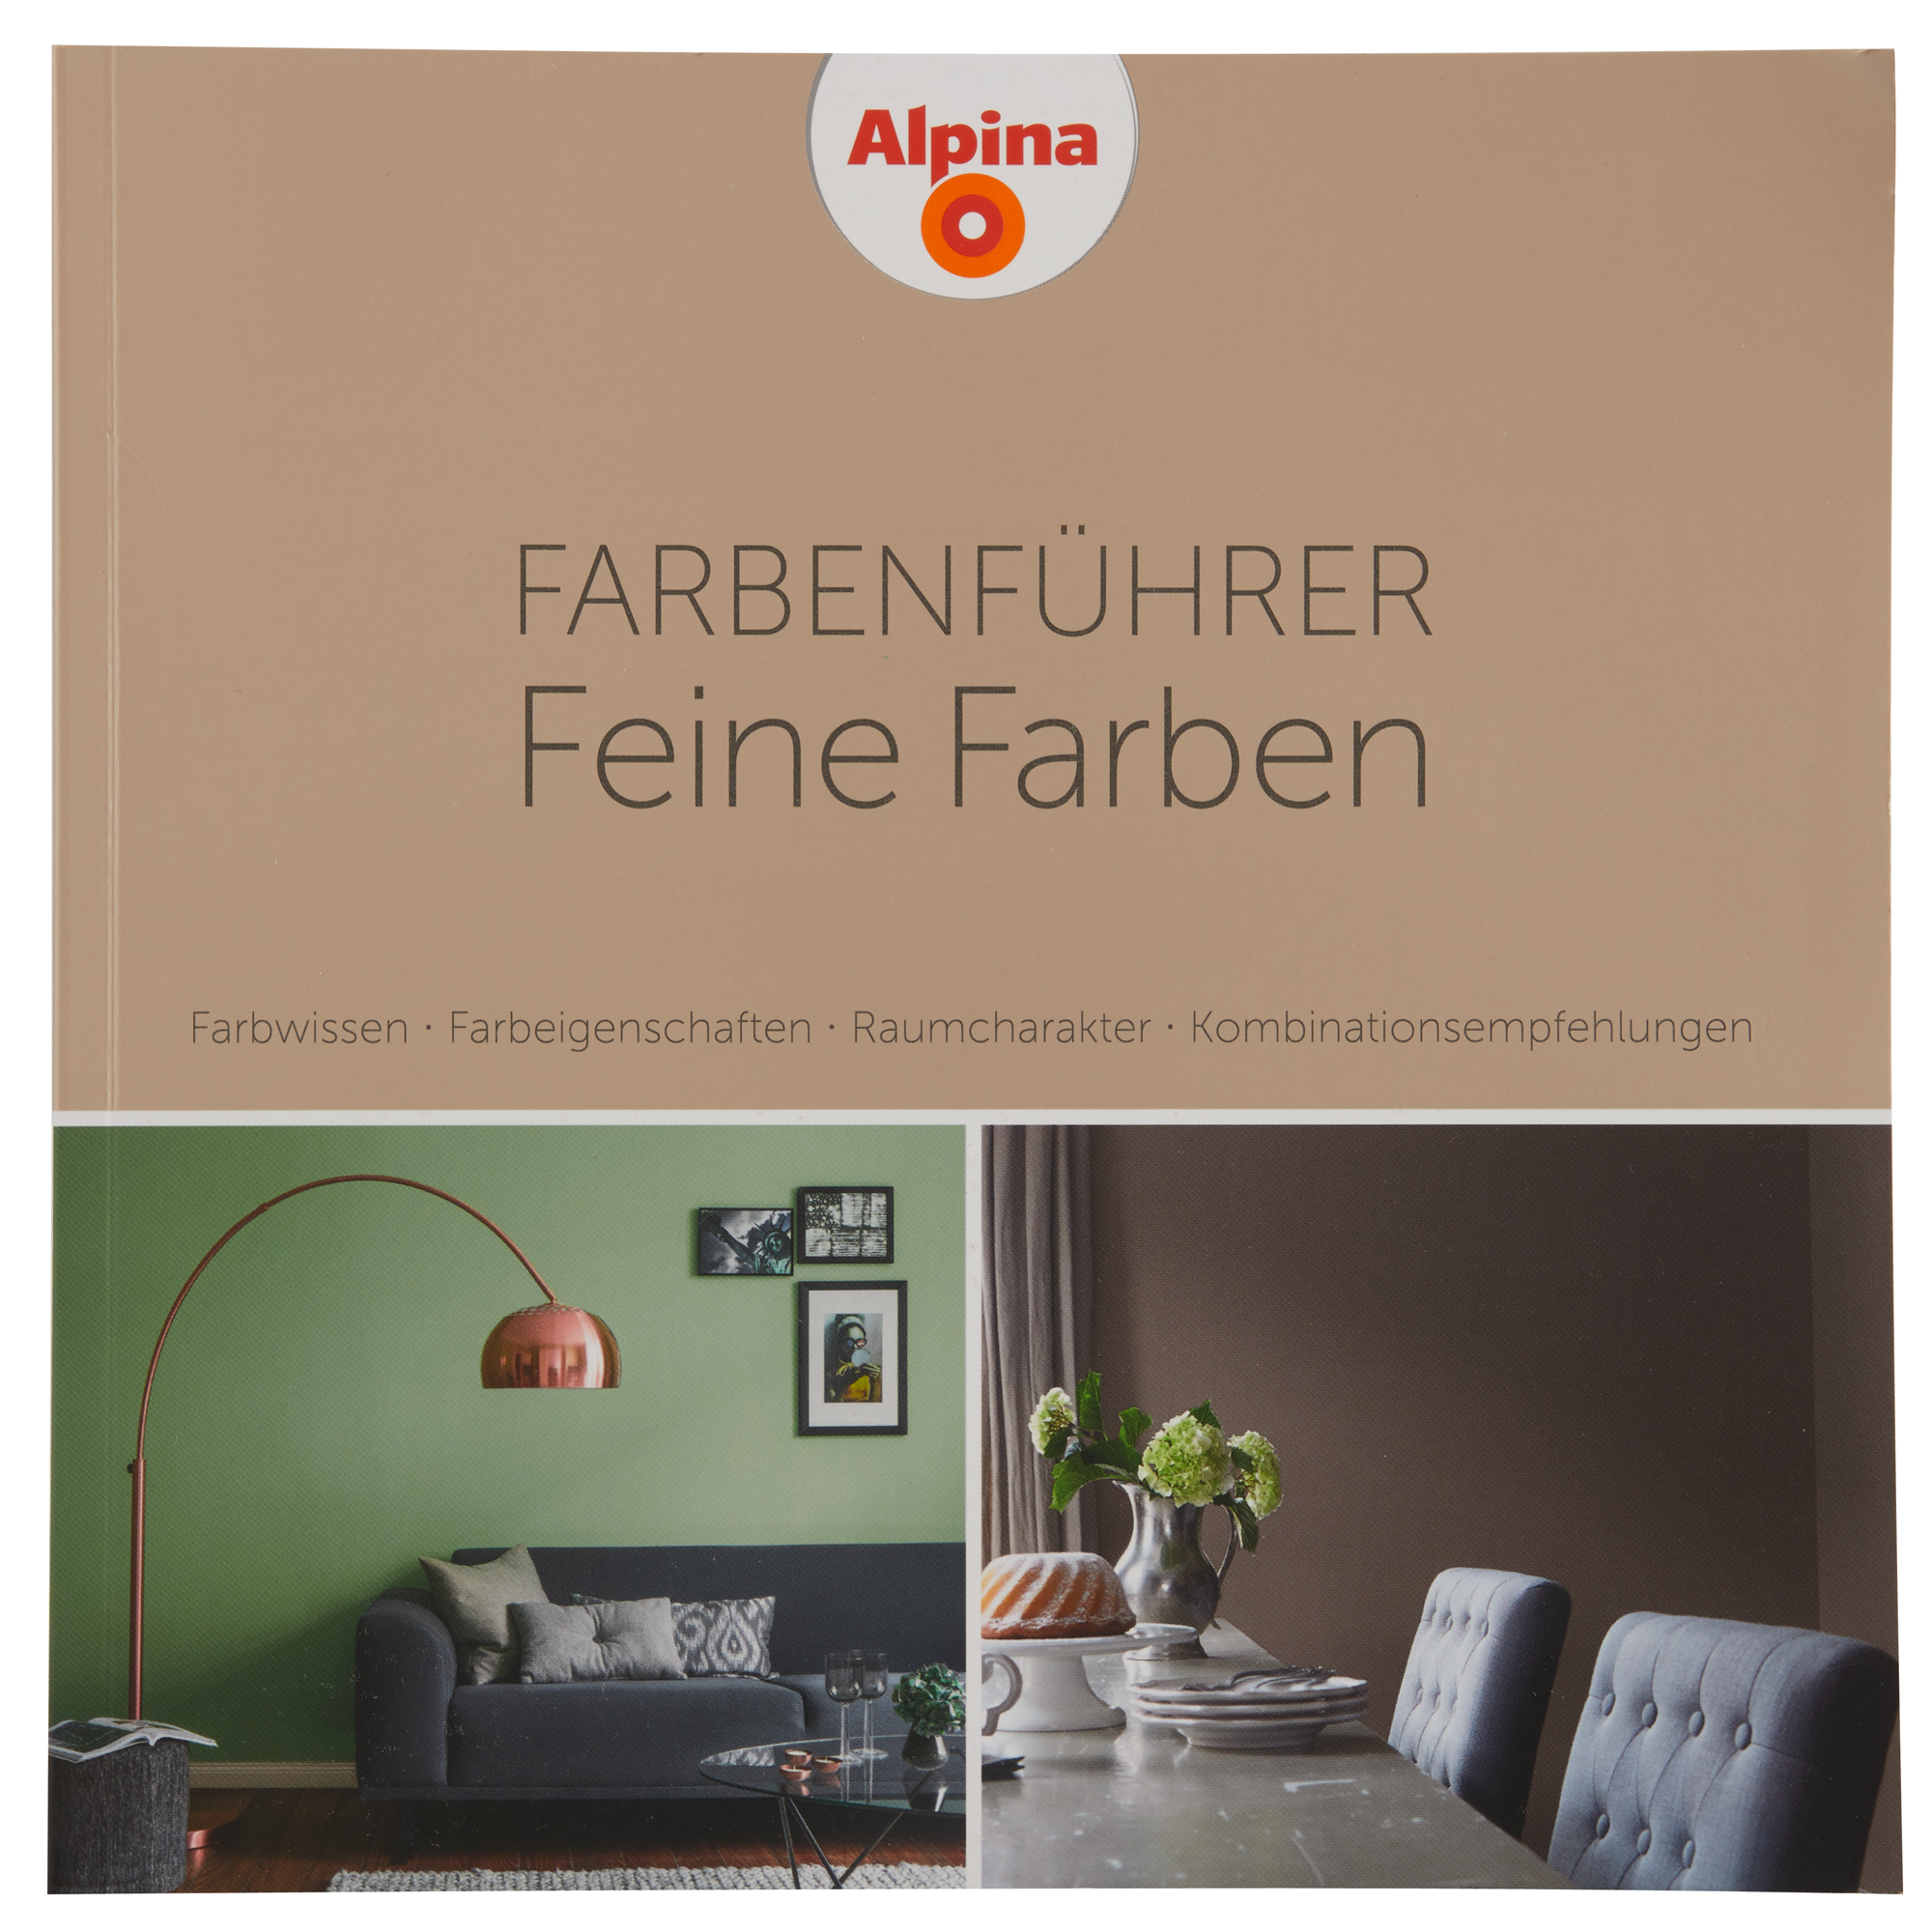 Farbenführer 'Feine Farben' 2018 + product picture